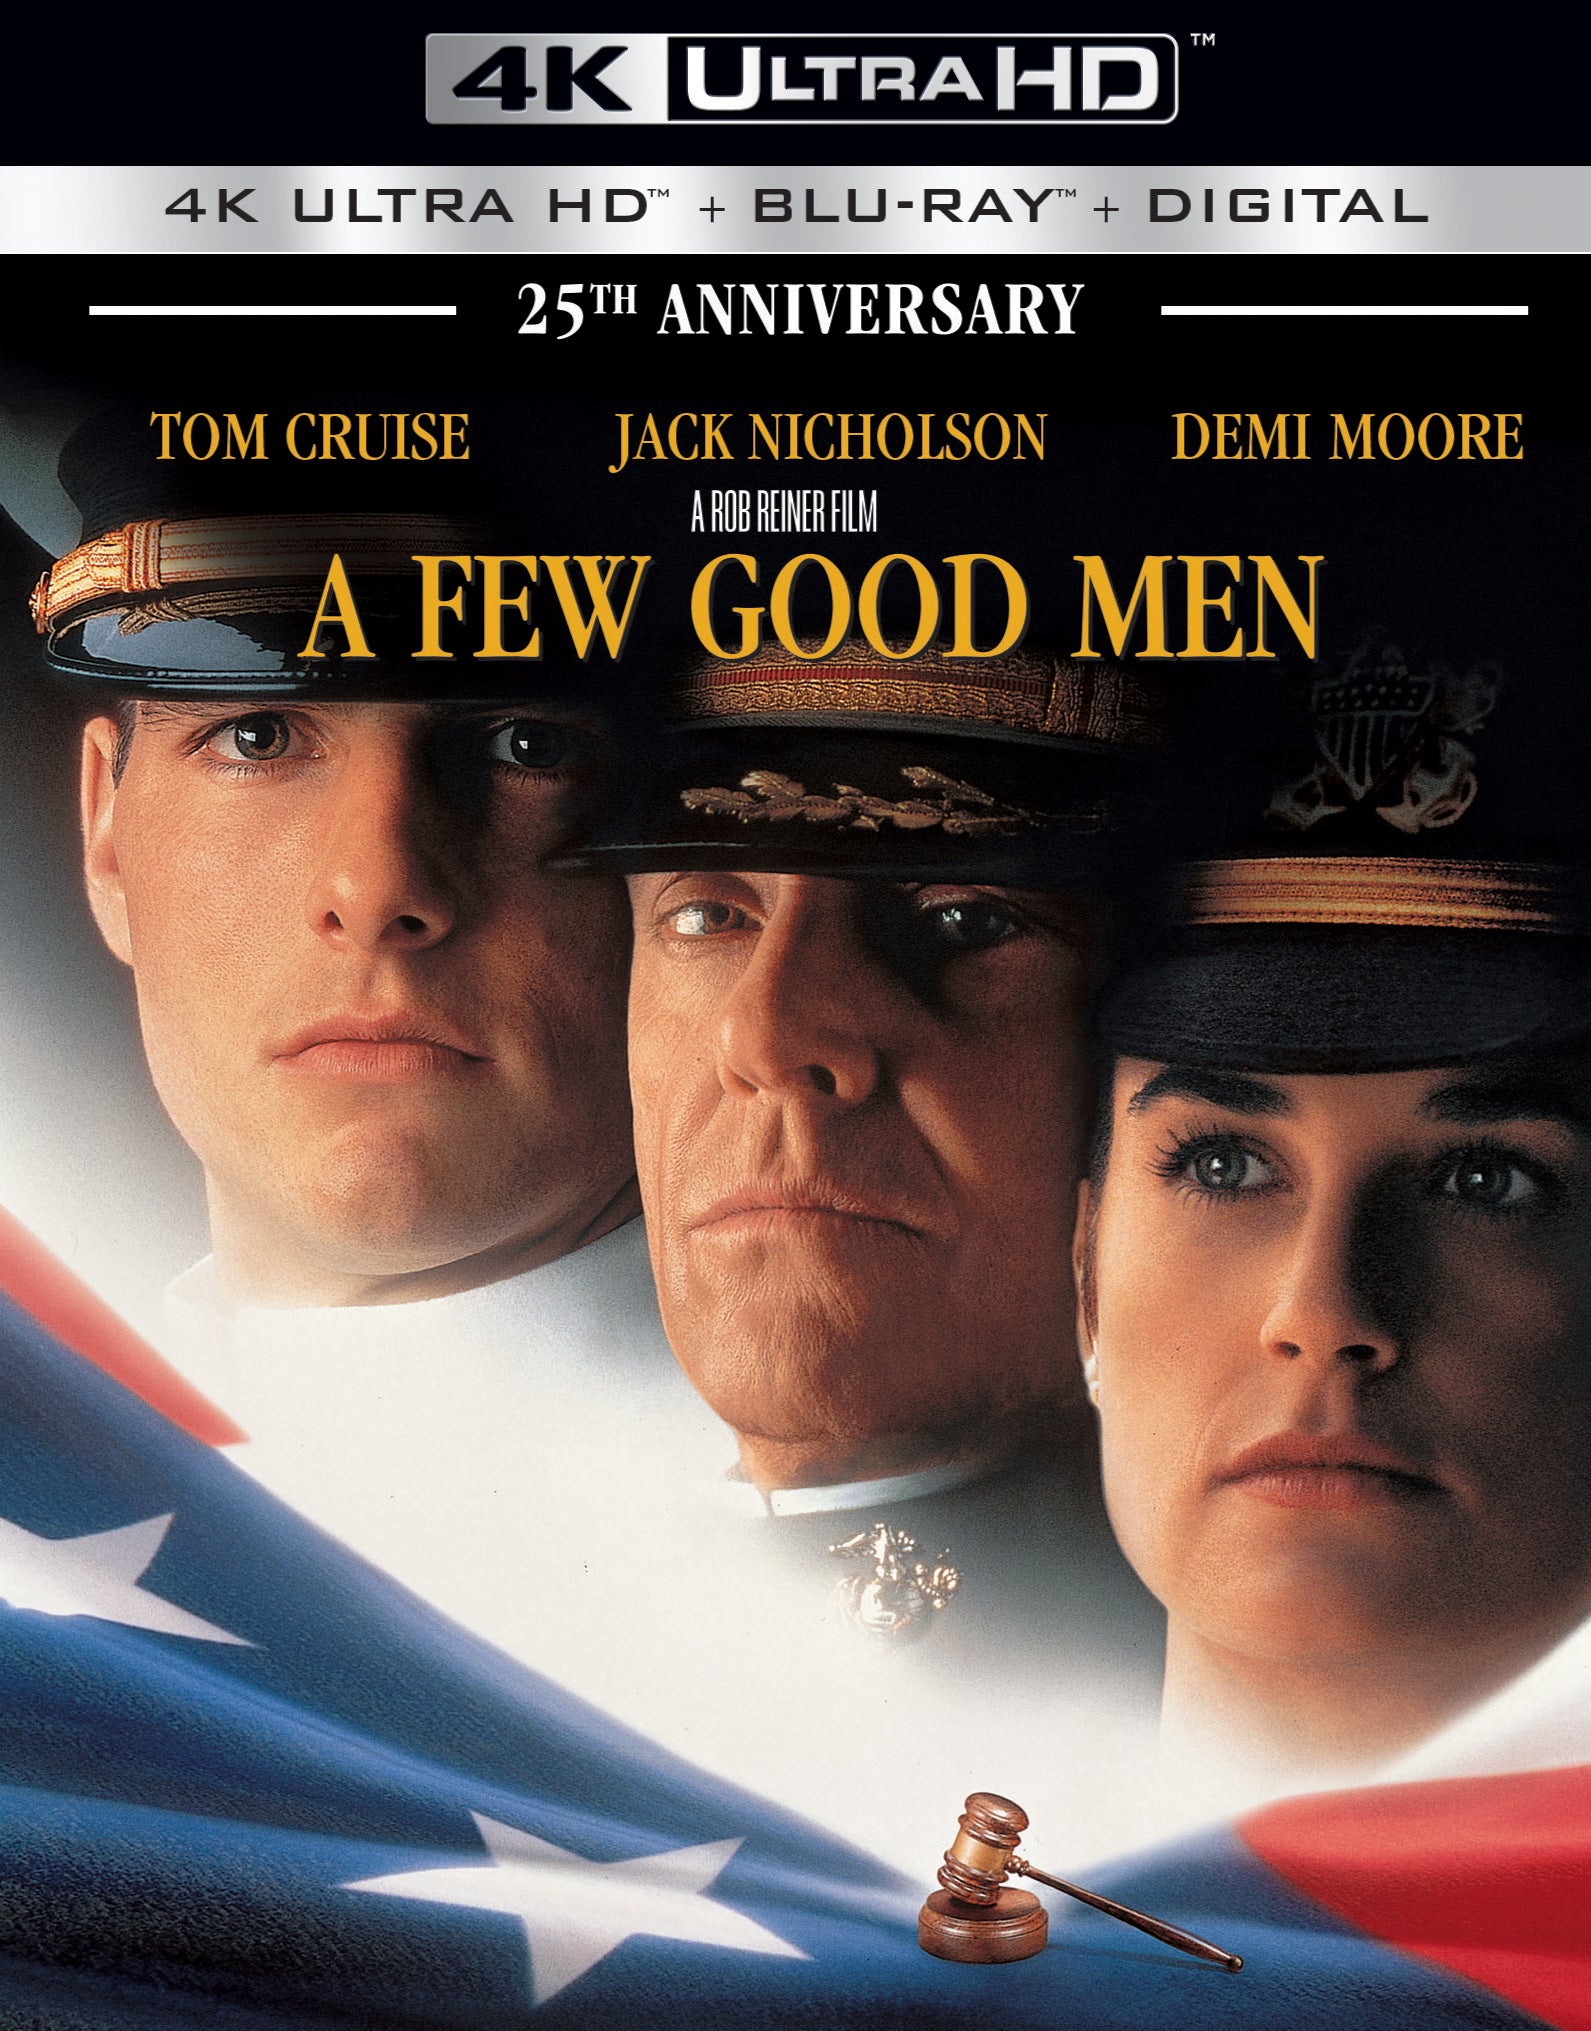 Few Good Men [Includes Digital Copy] [4K Ultra HD Blu-ray/Blu-ray] cover art